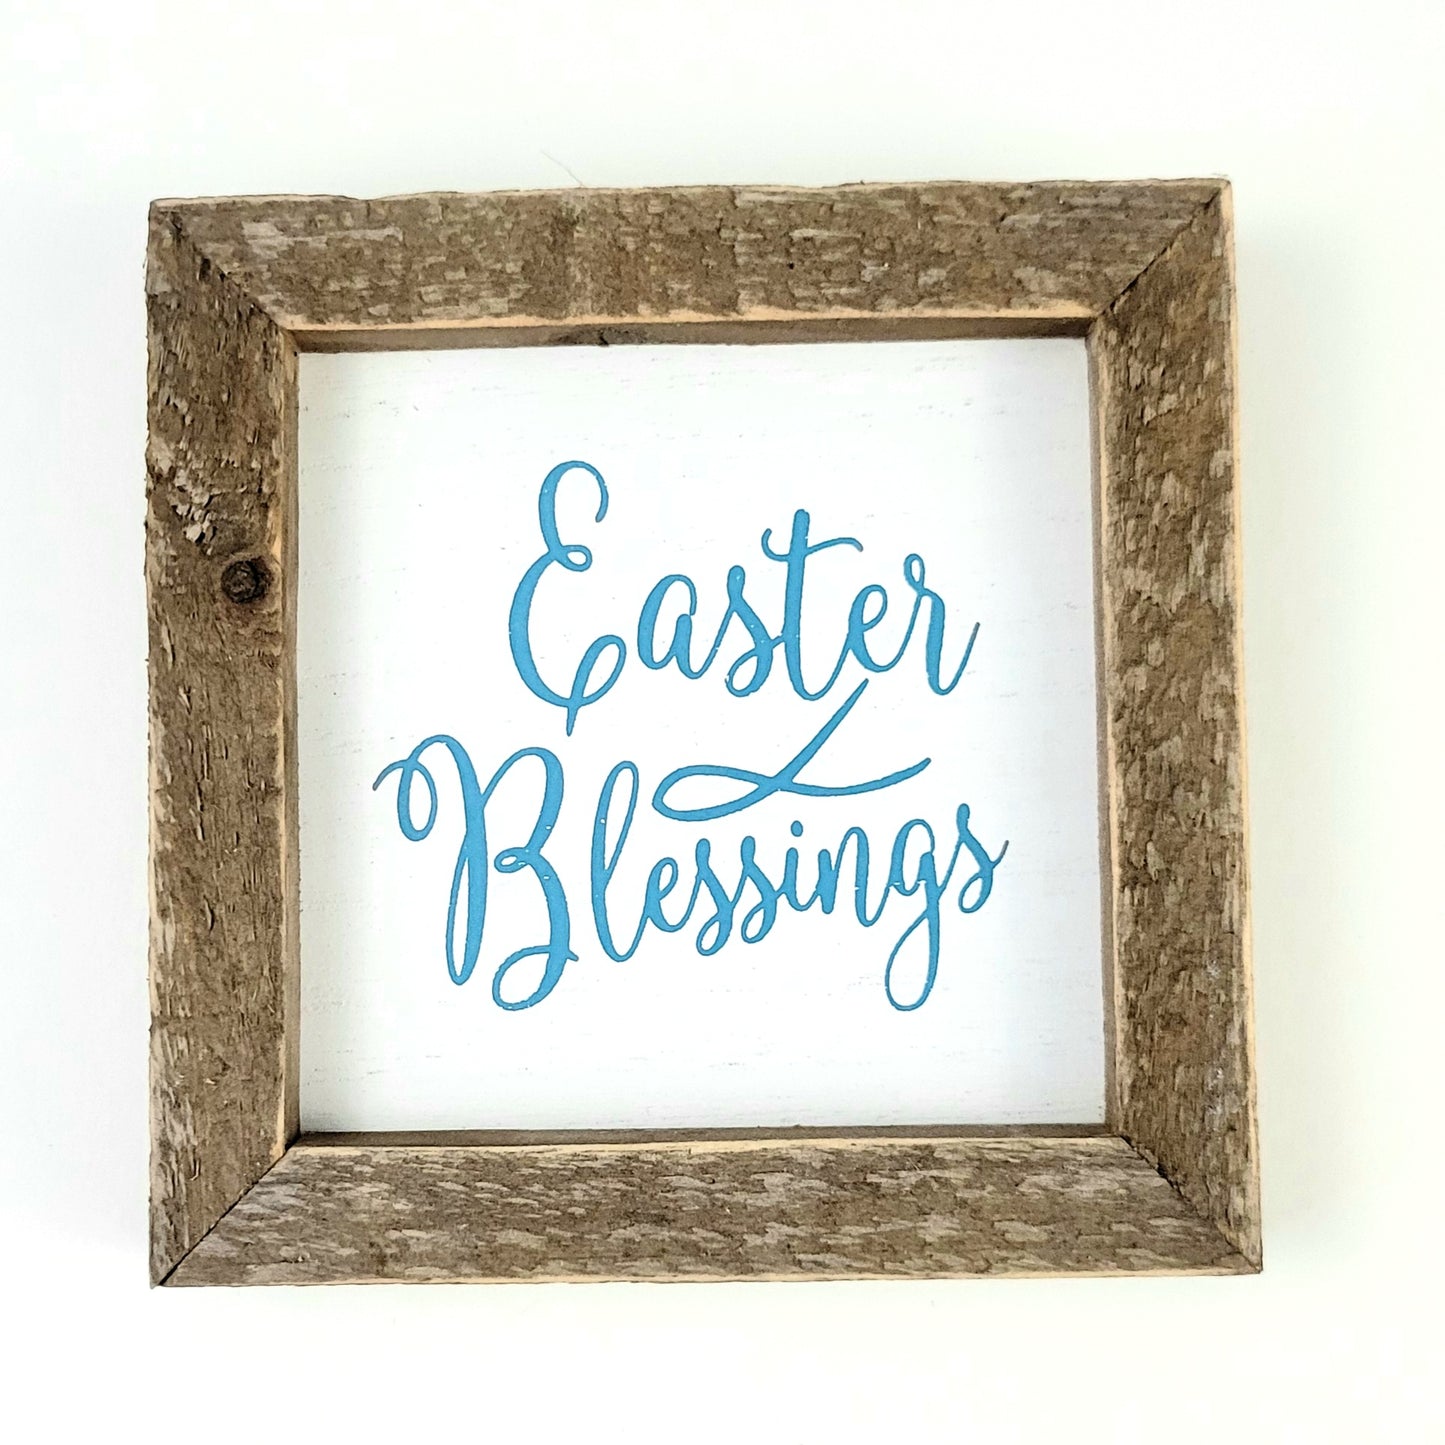 Easter Blessings Box Sign